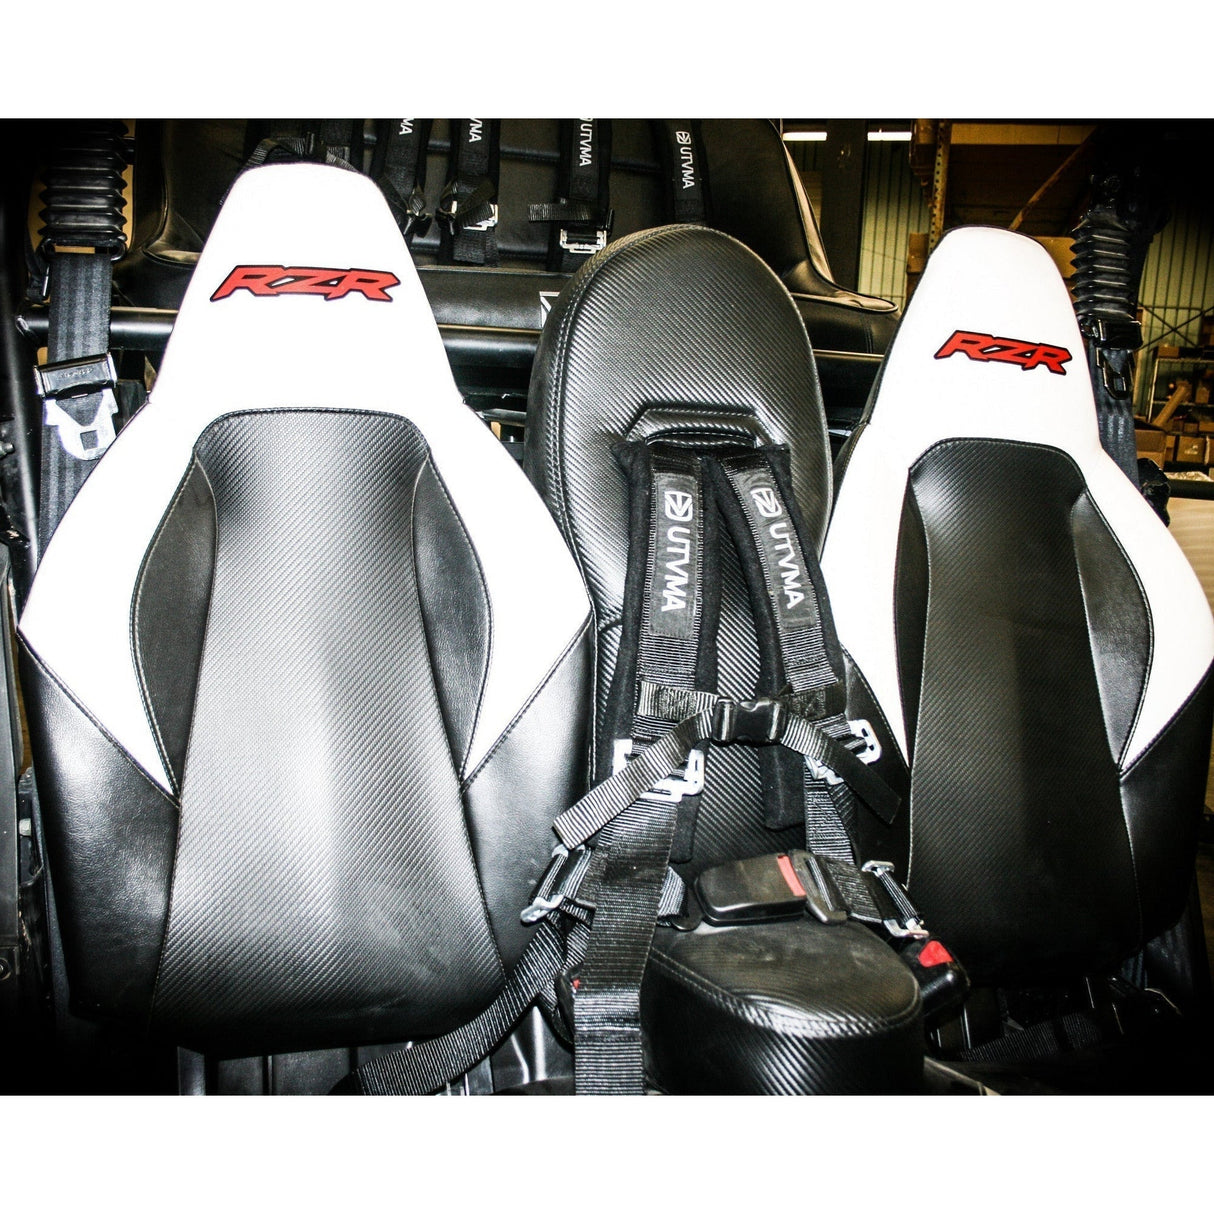 Polaris RZR XP 900 Bump Seat with Harness